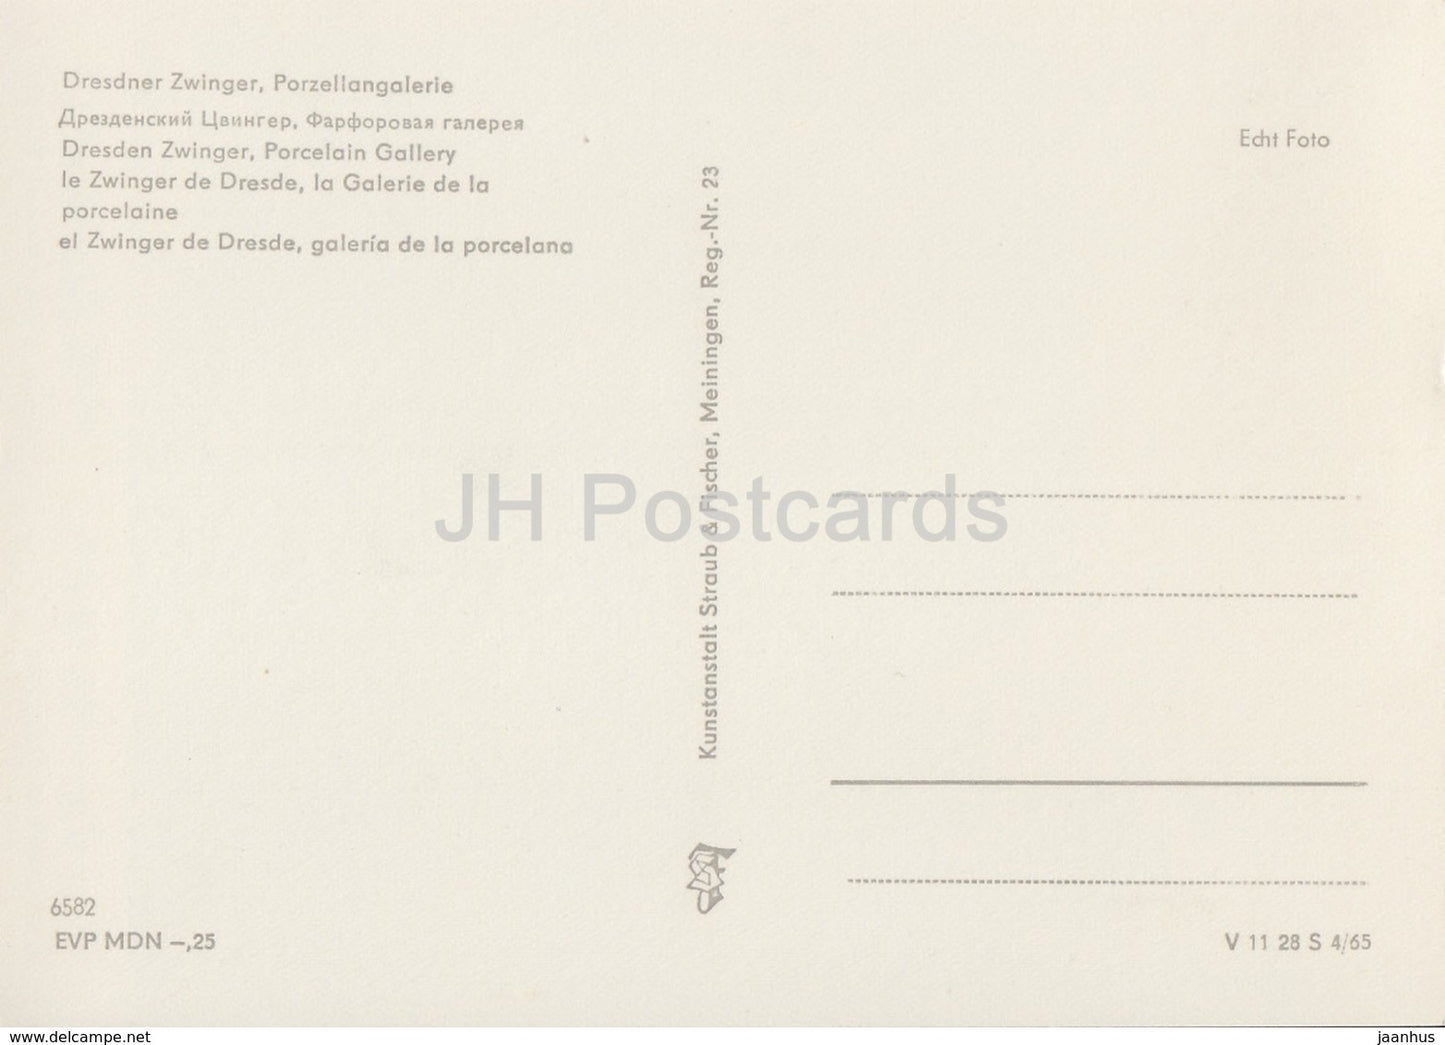 Dresden - Dresdner Zwinger - Porcelain Gallery - REISEBÜRO - 1964 - DDR - Germany - unused - JH Postcards